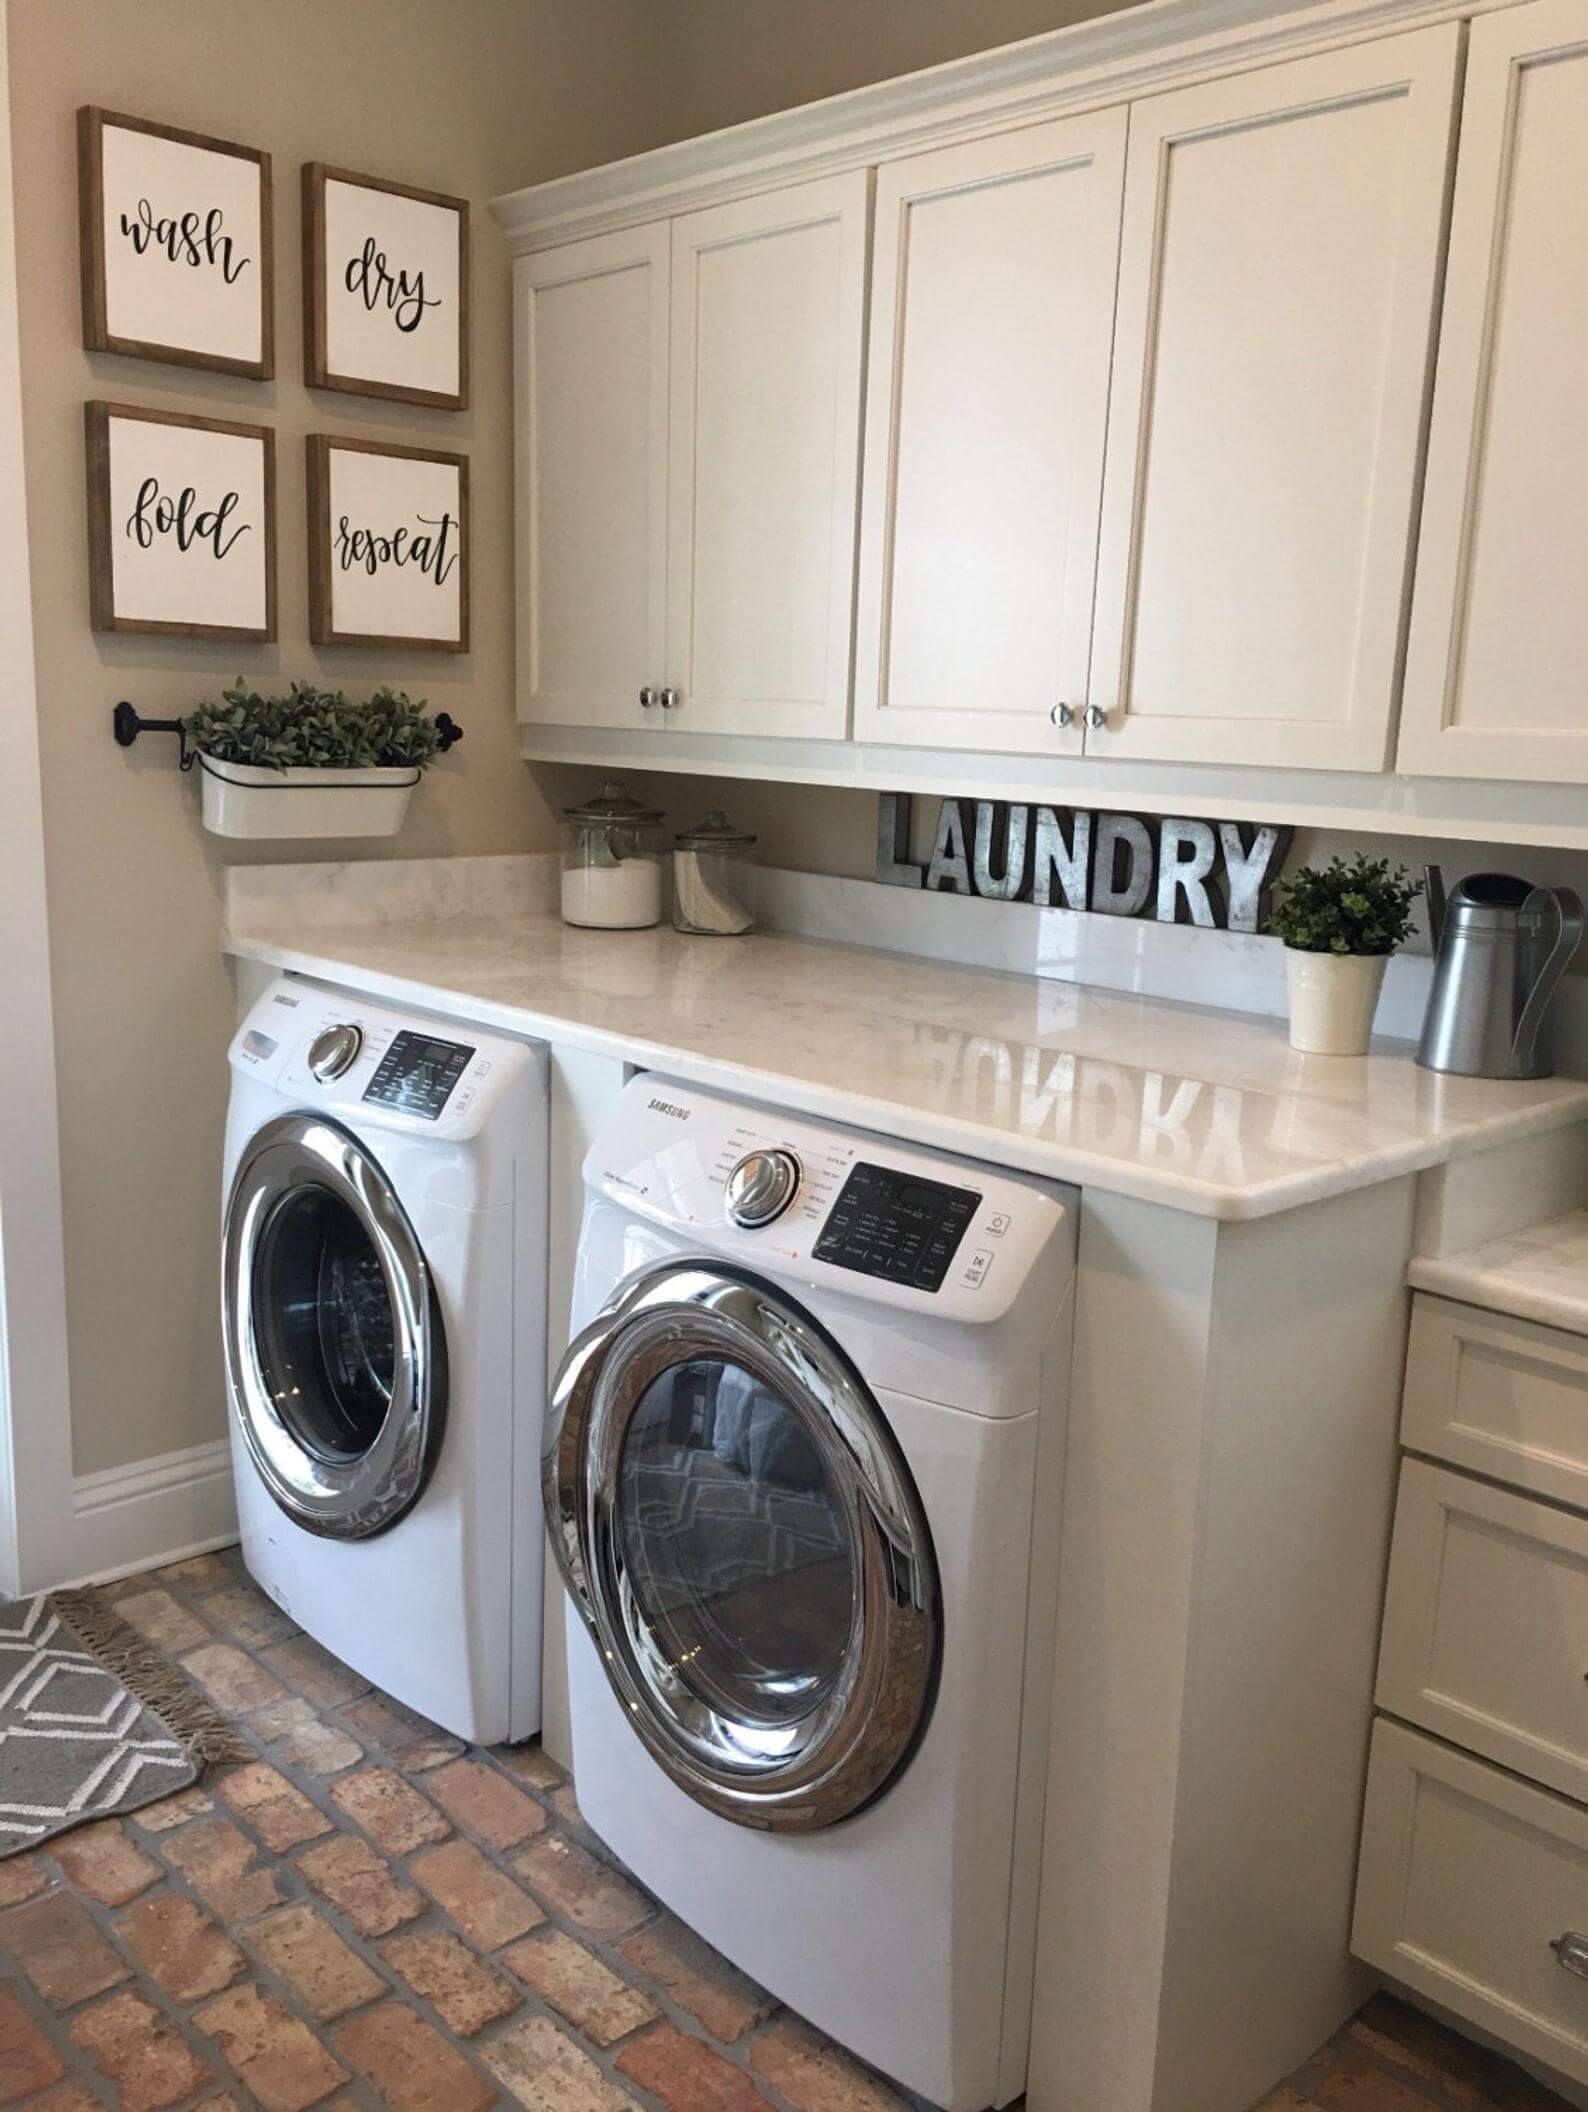 DIY Farmhouse Laundry Room Ideas: Wash Dry Fold Repeat Signs